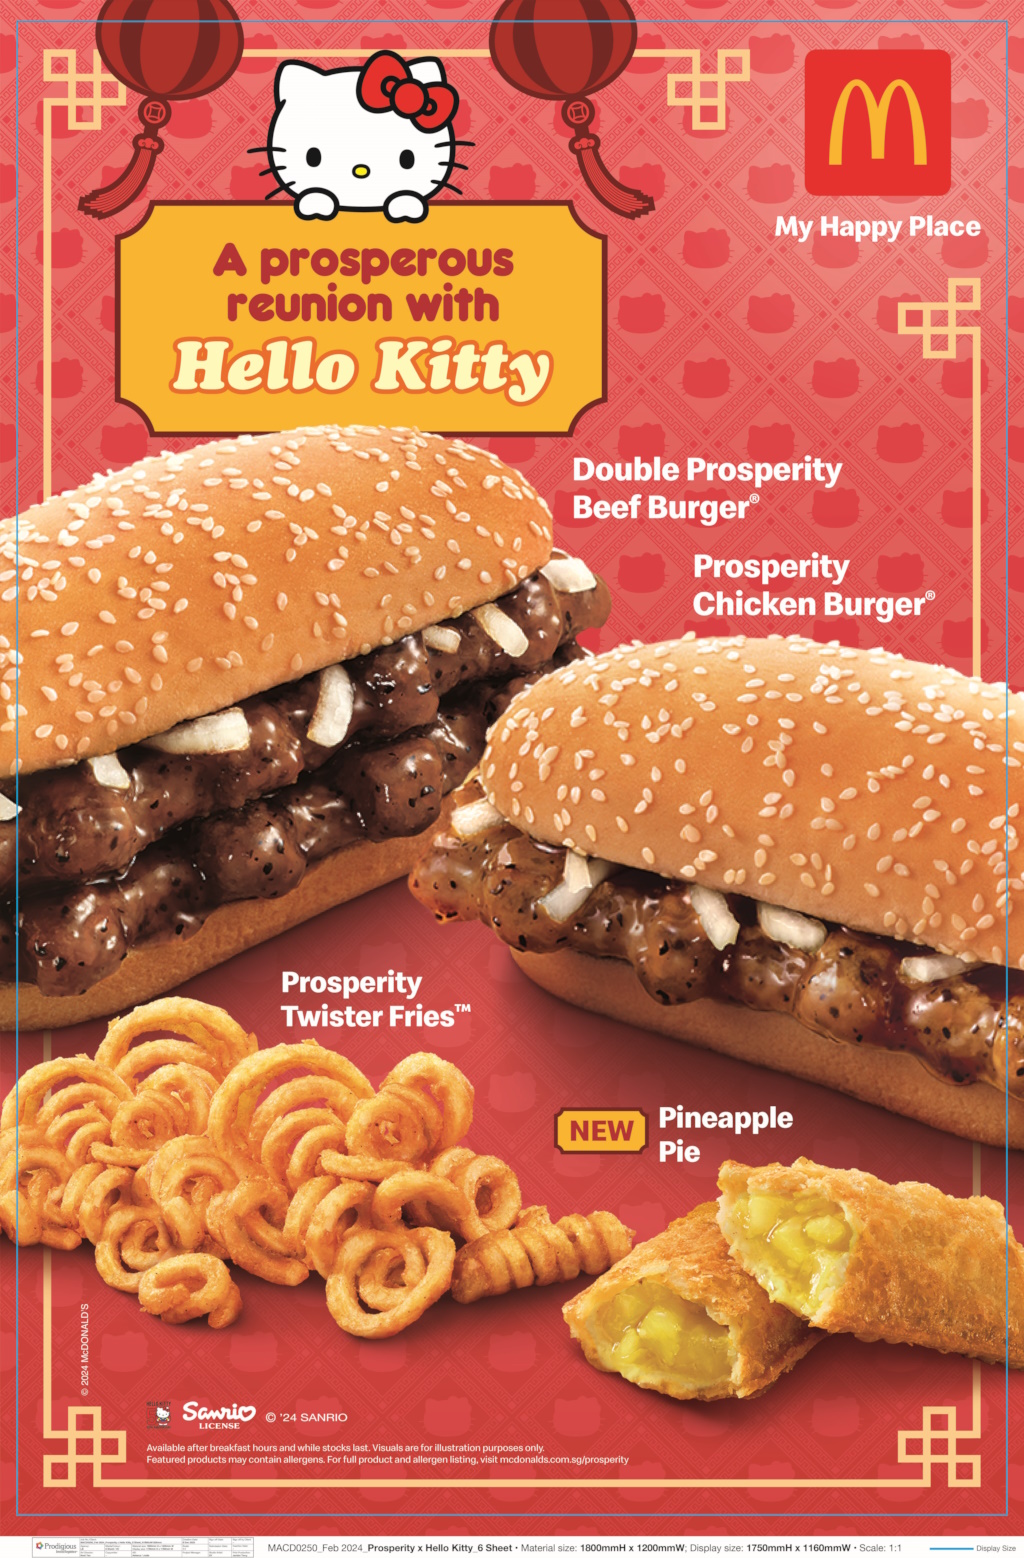 02 ev-mcdonald's hello kitty singapore-prosperity burger-hungrygowhere